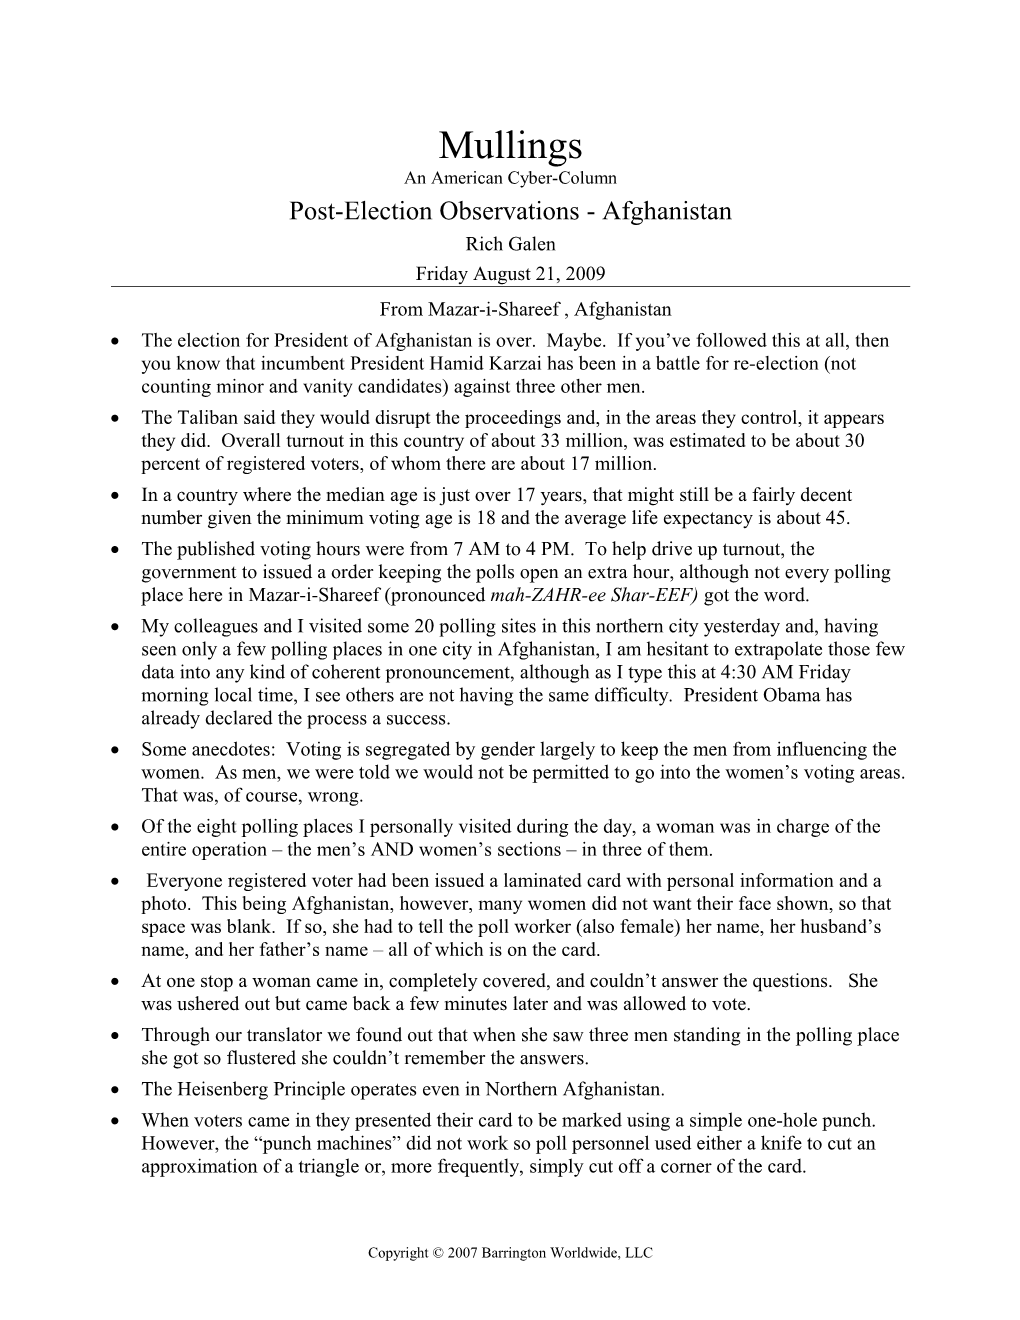 Post-Election Observations - Afghanistan